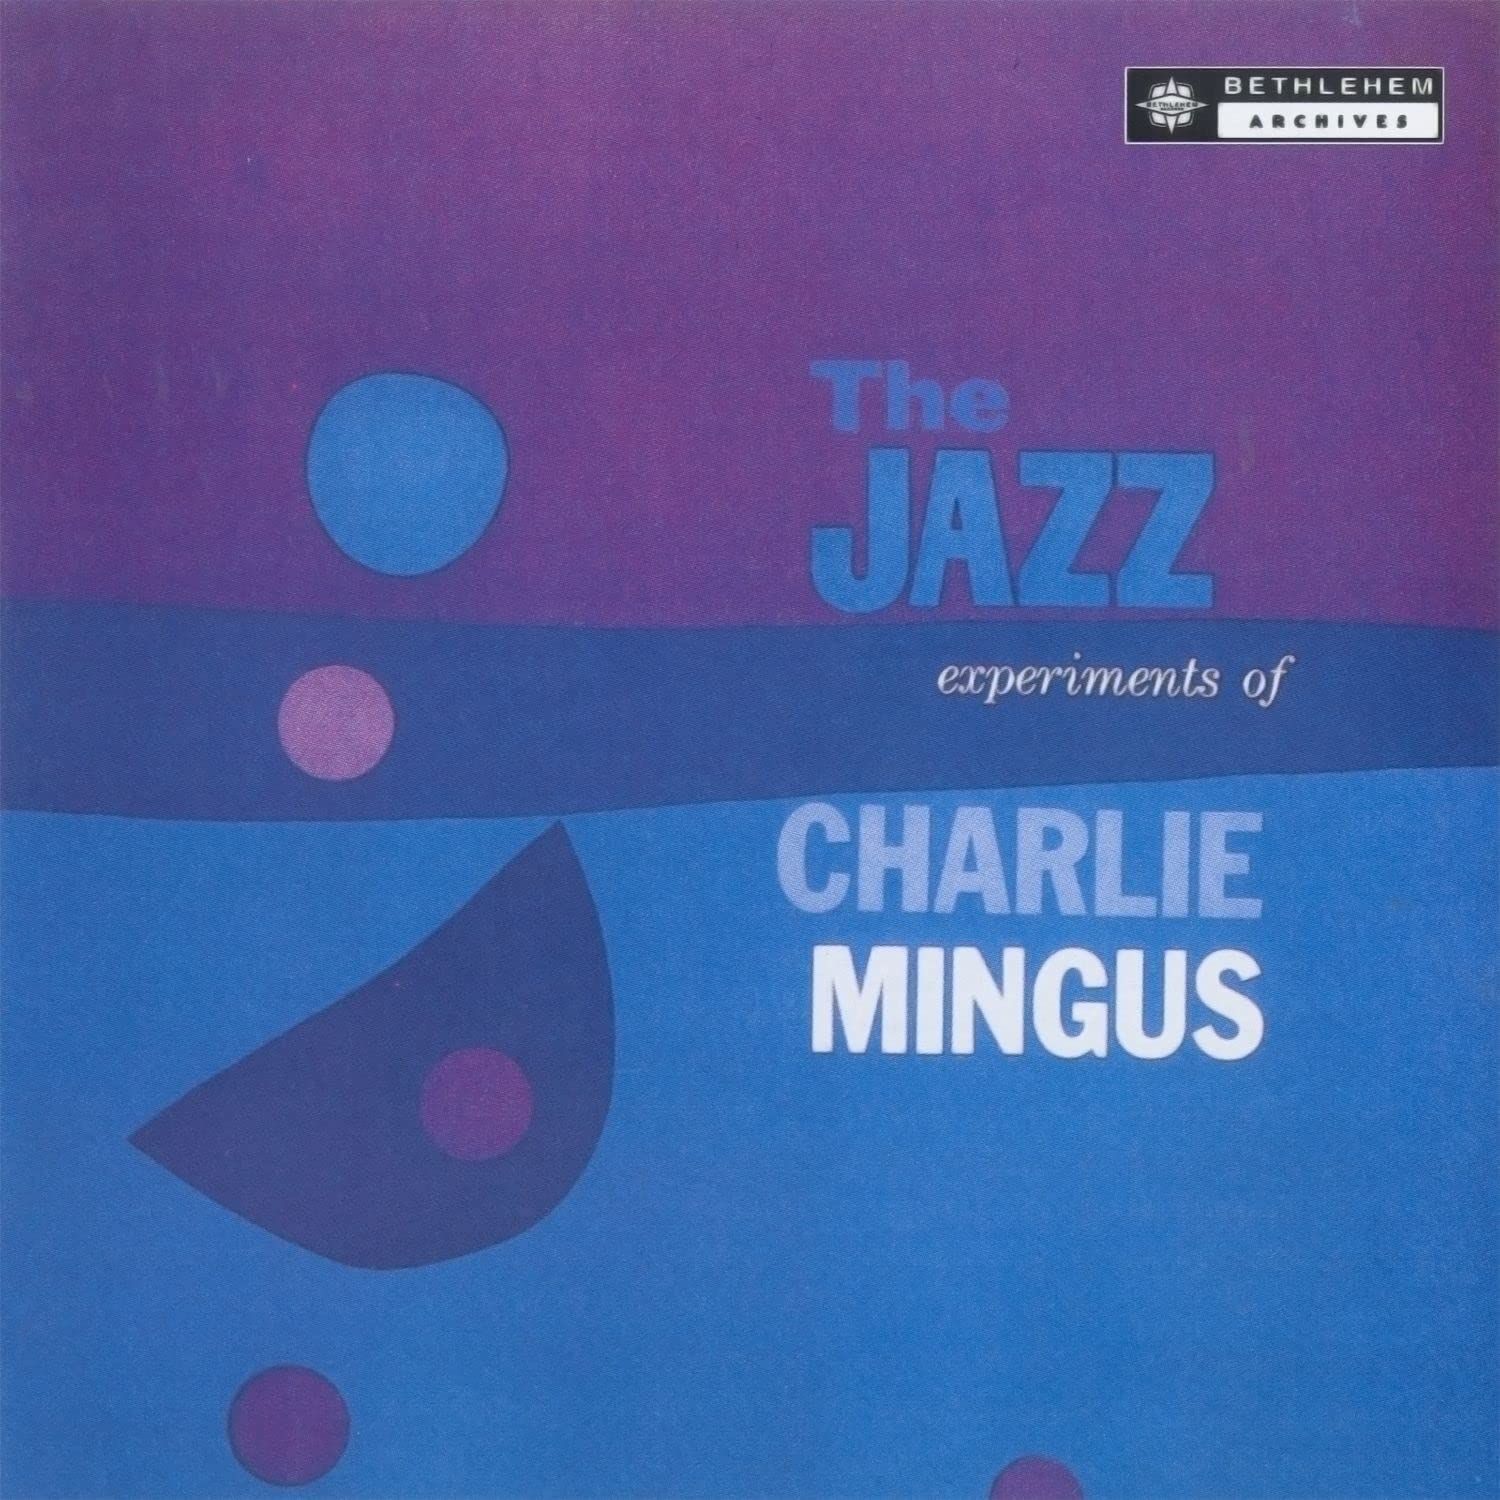 The Charles Mingus Jazz EXPERIMENTS OF CHARLES MINGUS VINYL LP NEW SEALED